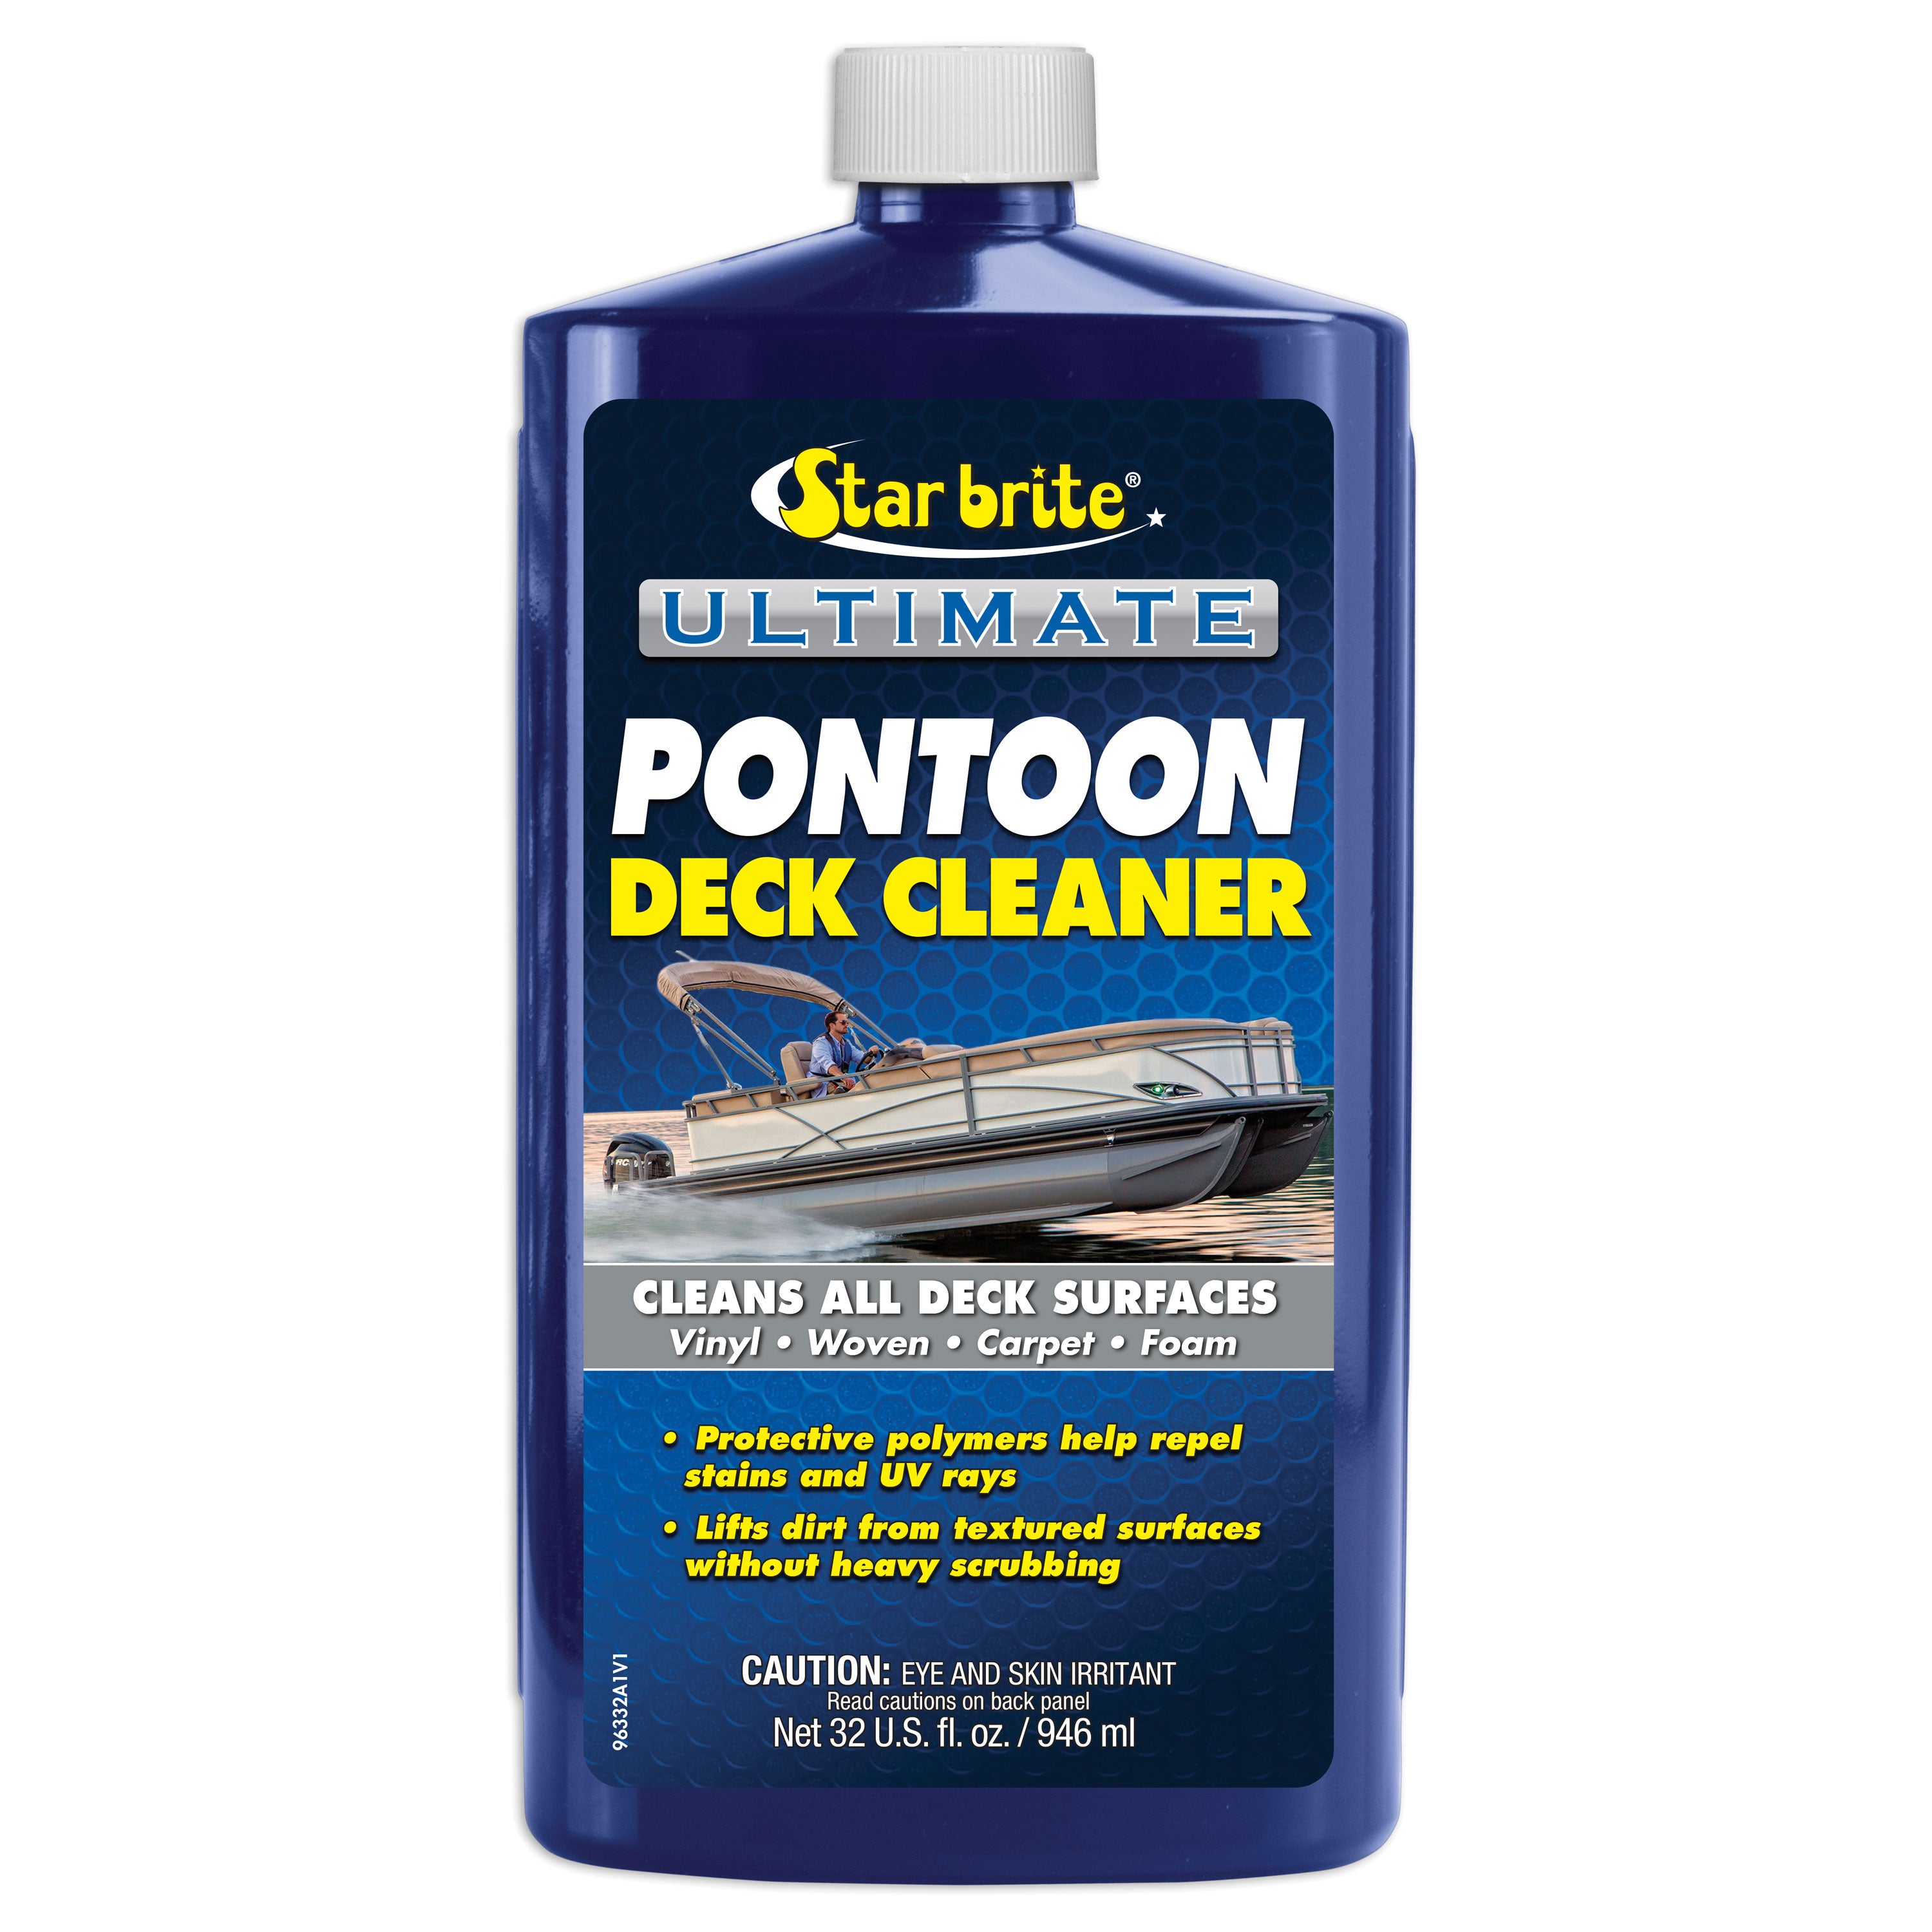 Star brite 096332 Ultimate Pontoon Deck Cleaner - 32 oz